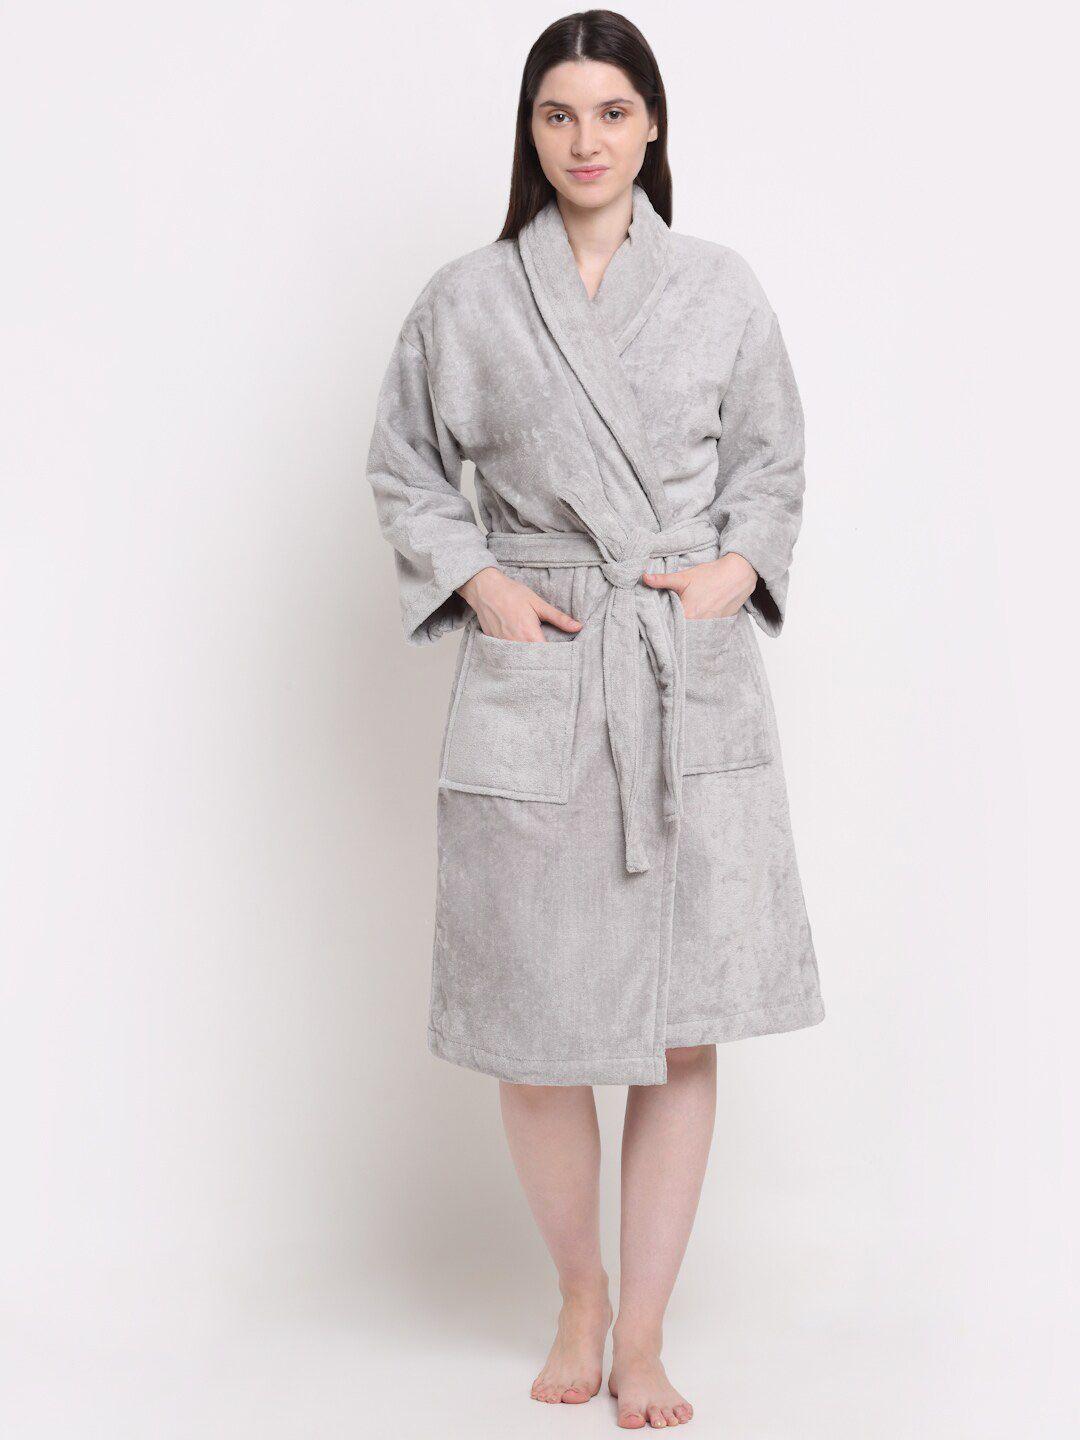 creeva grey bath robe with pockets